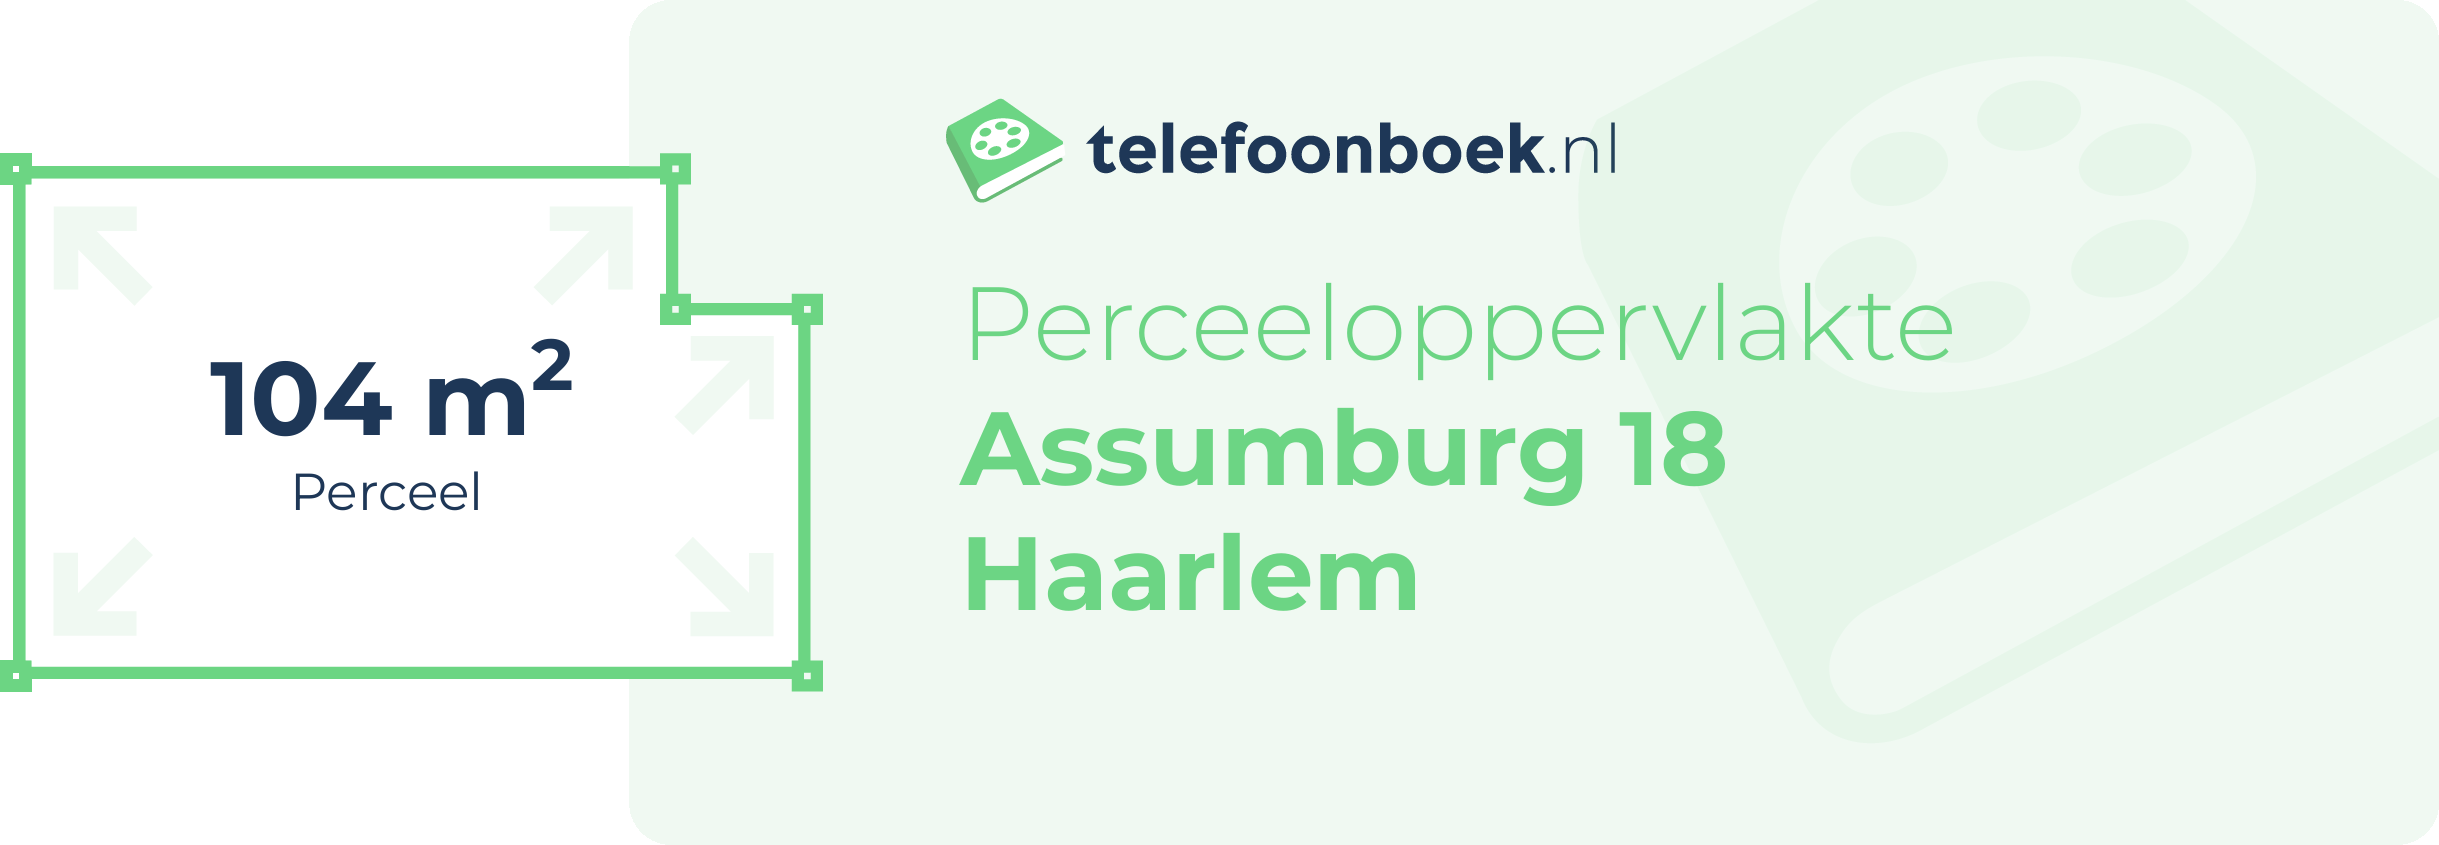 Perceeloppervlakte Assumburg 18 Haarlem